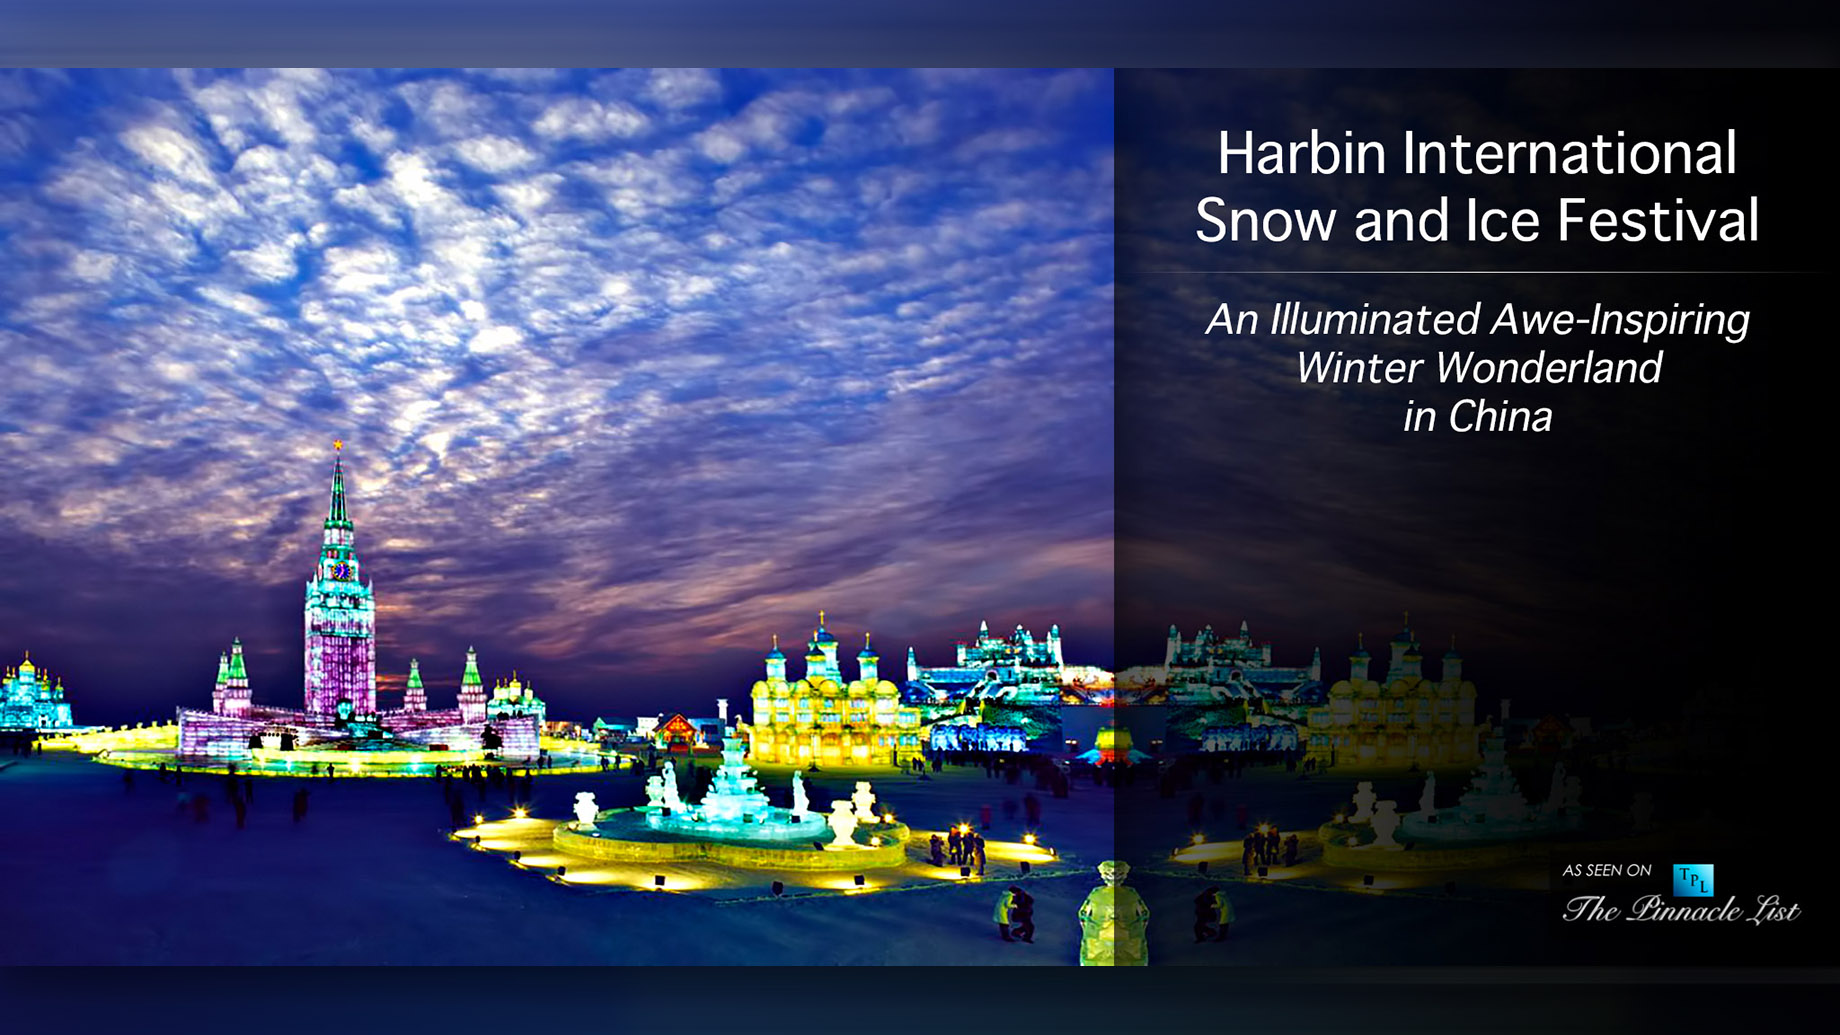 Harbin International Snow and Ice Festival – An Illuminated Awe-Inspiring Winter Wonderland in China